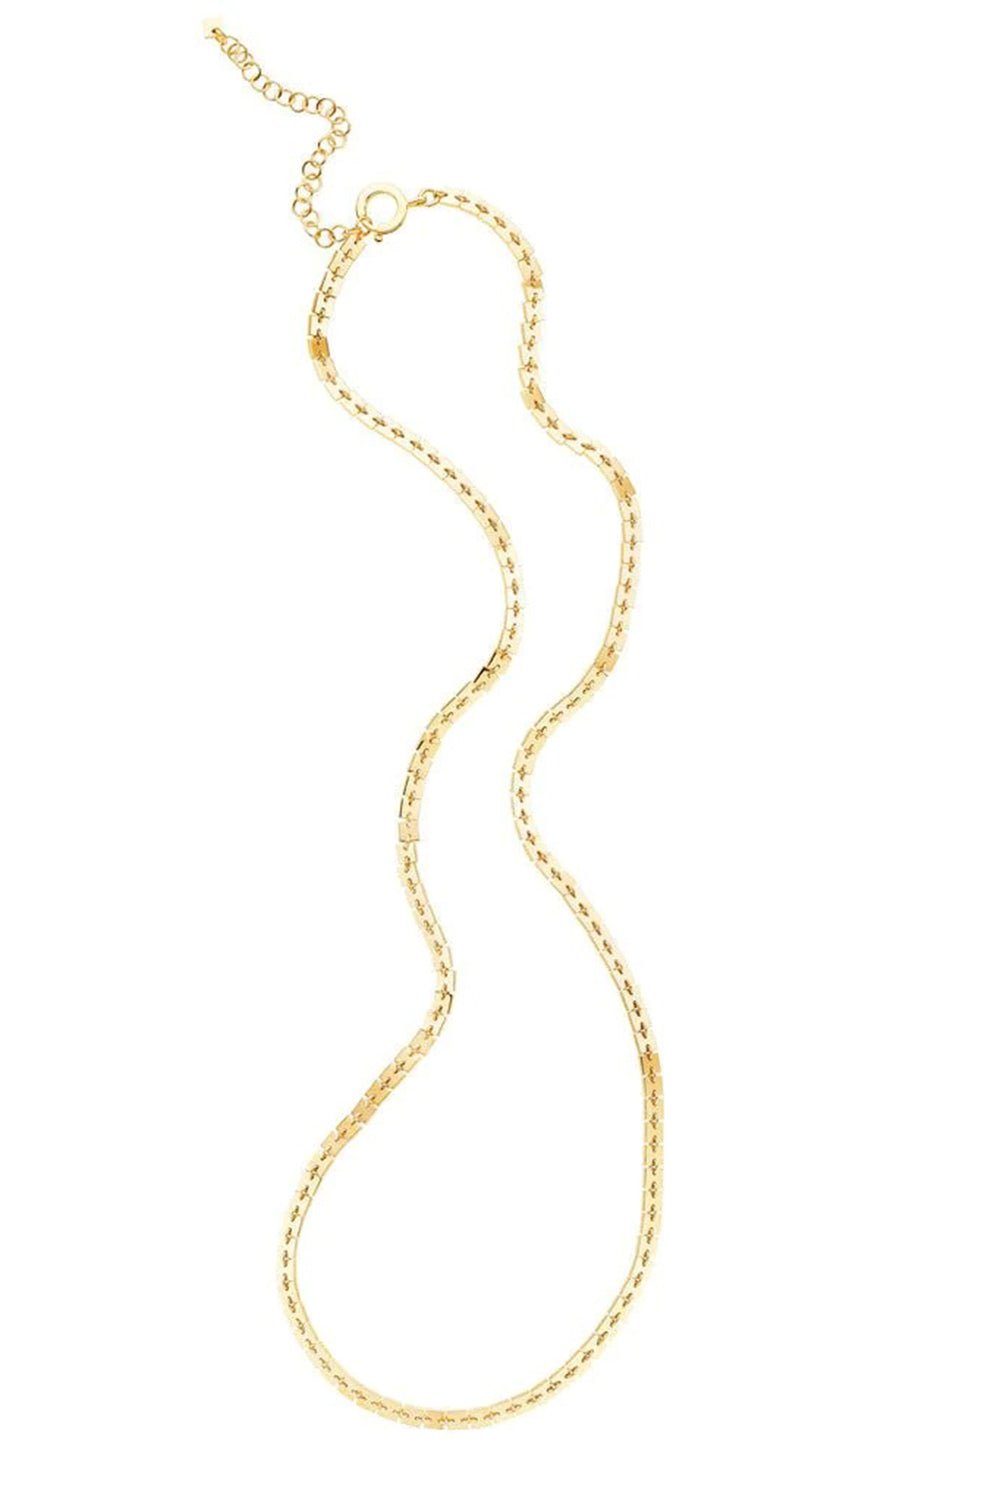 CADAR-Medium Foundation Chain Necklace-YELLOW GOLD